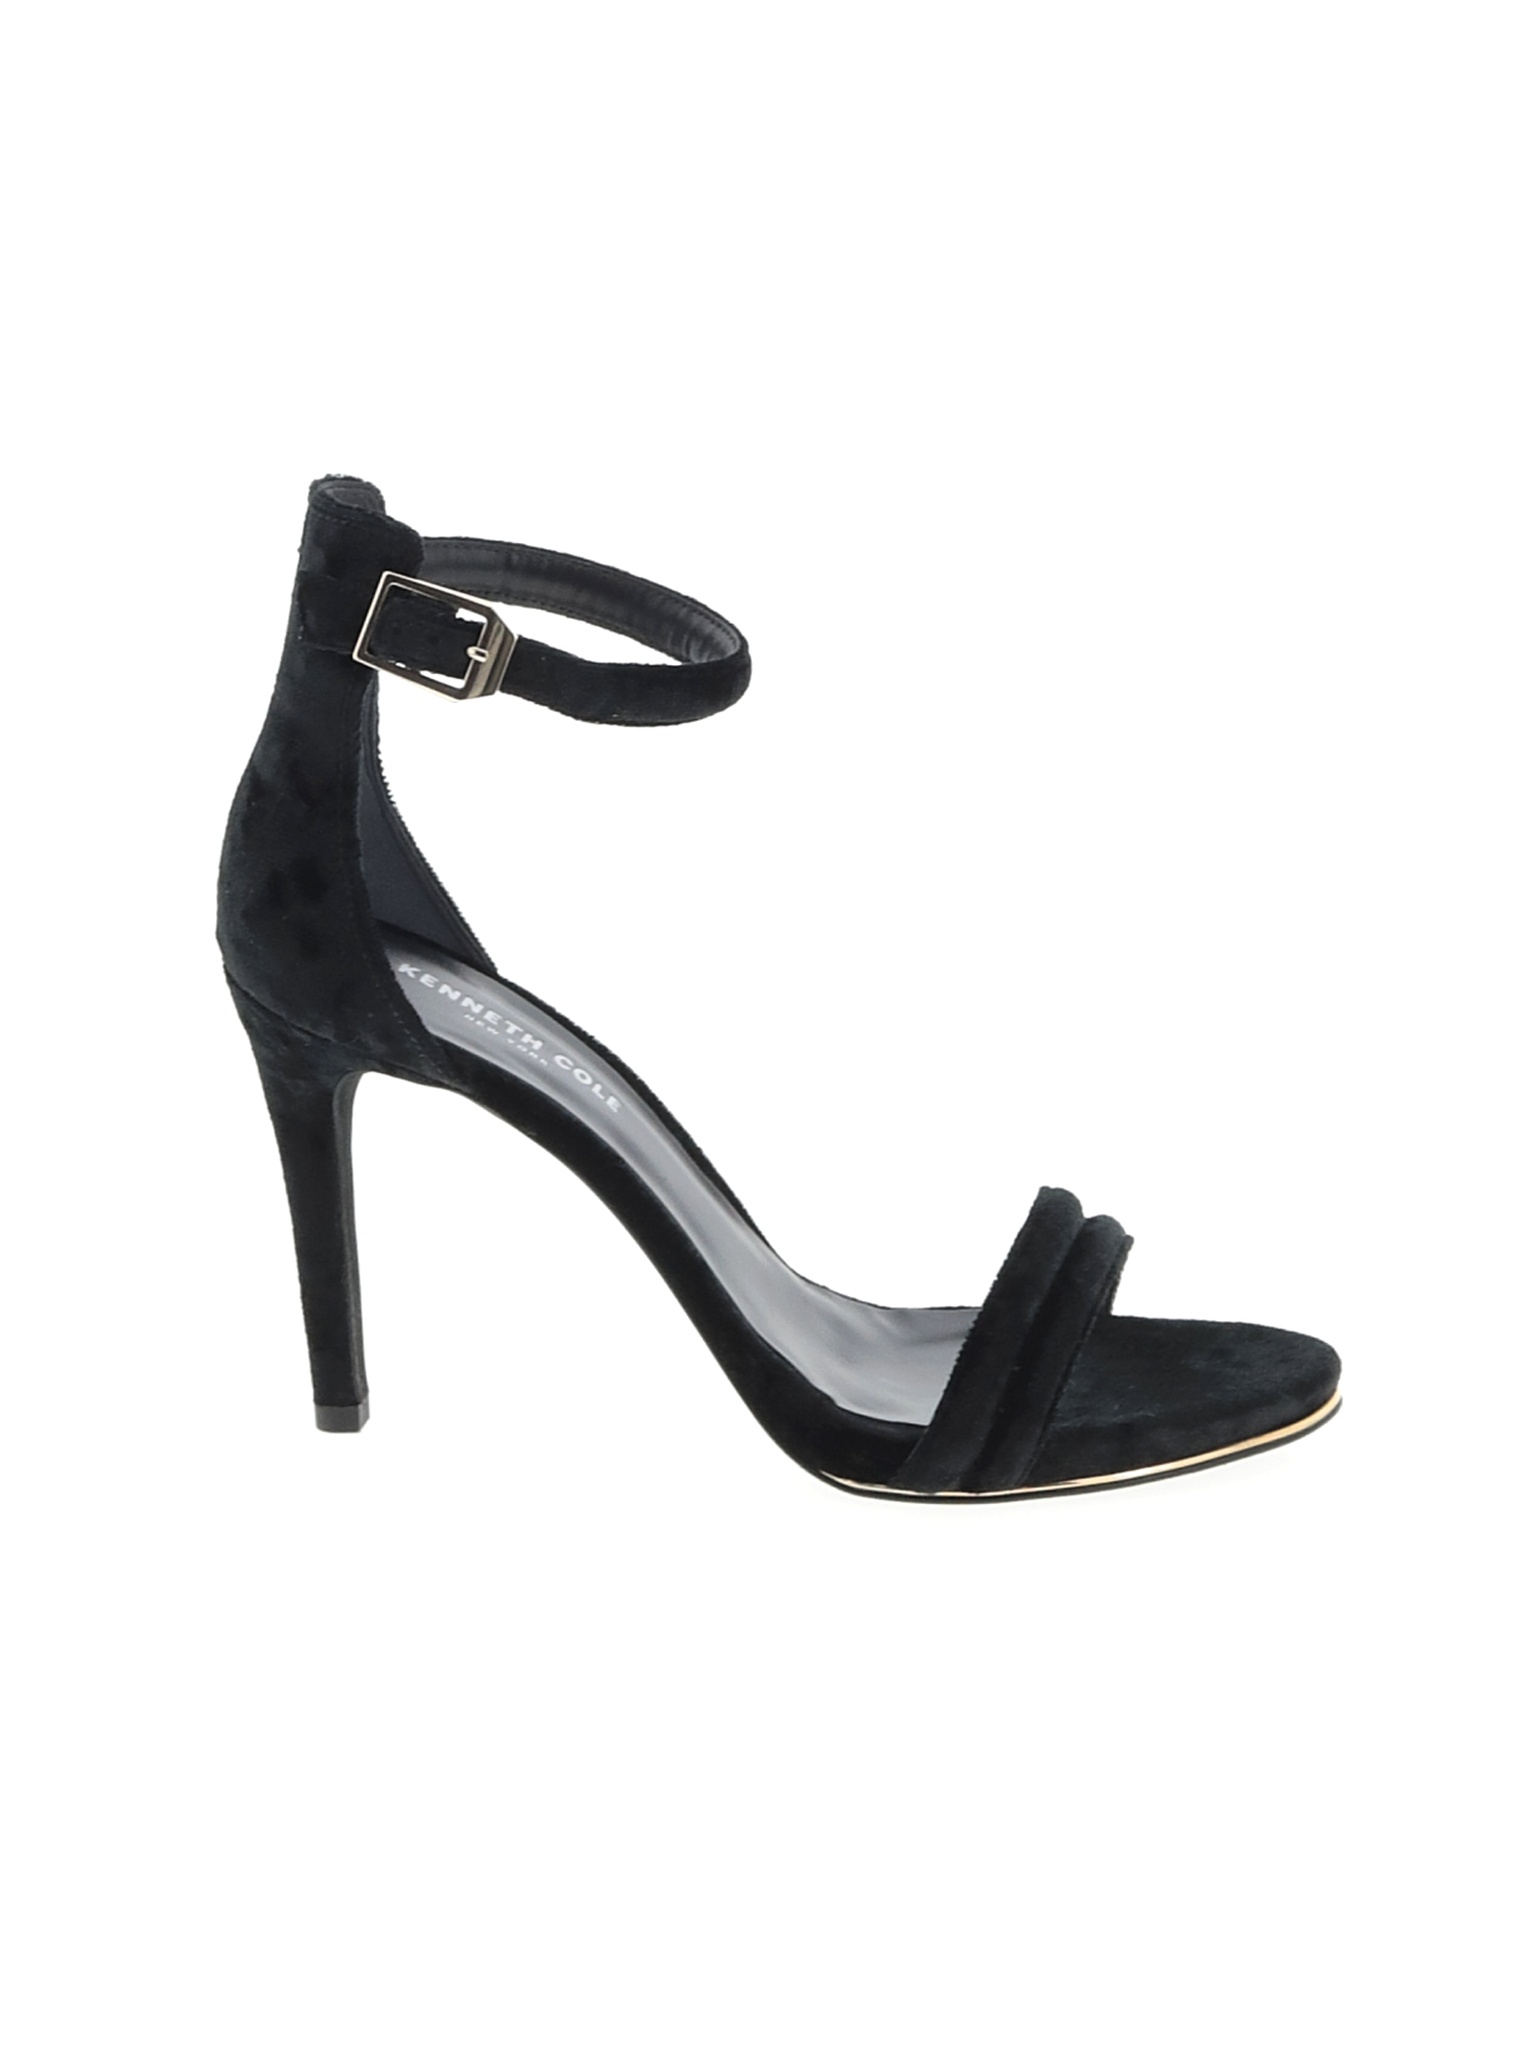 Kenneth Cole New York Women Black Heels US 9.5 | eBay